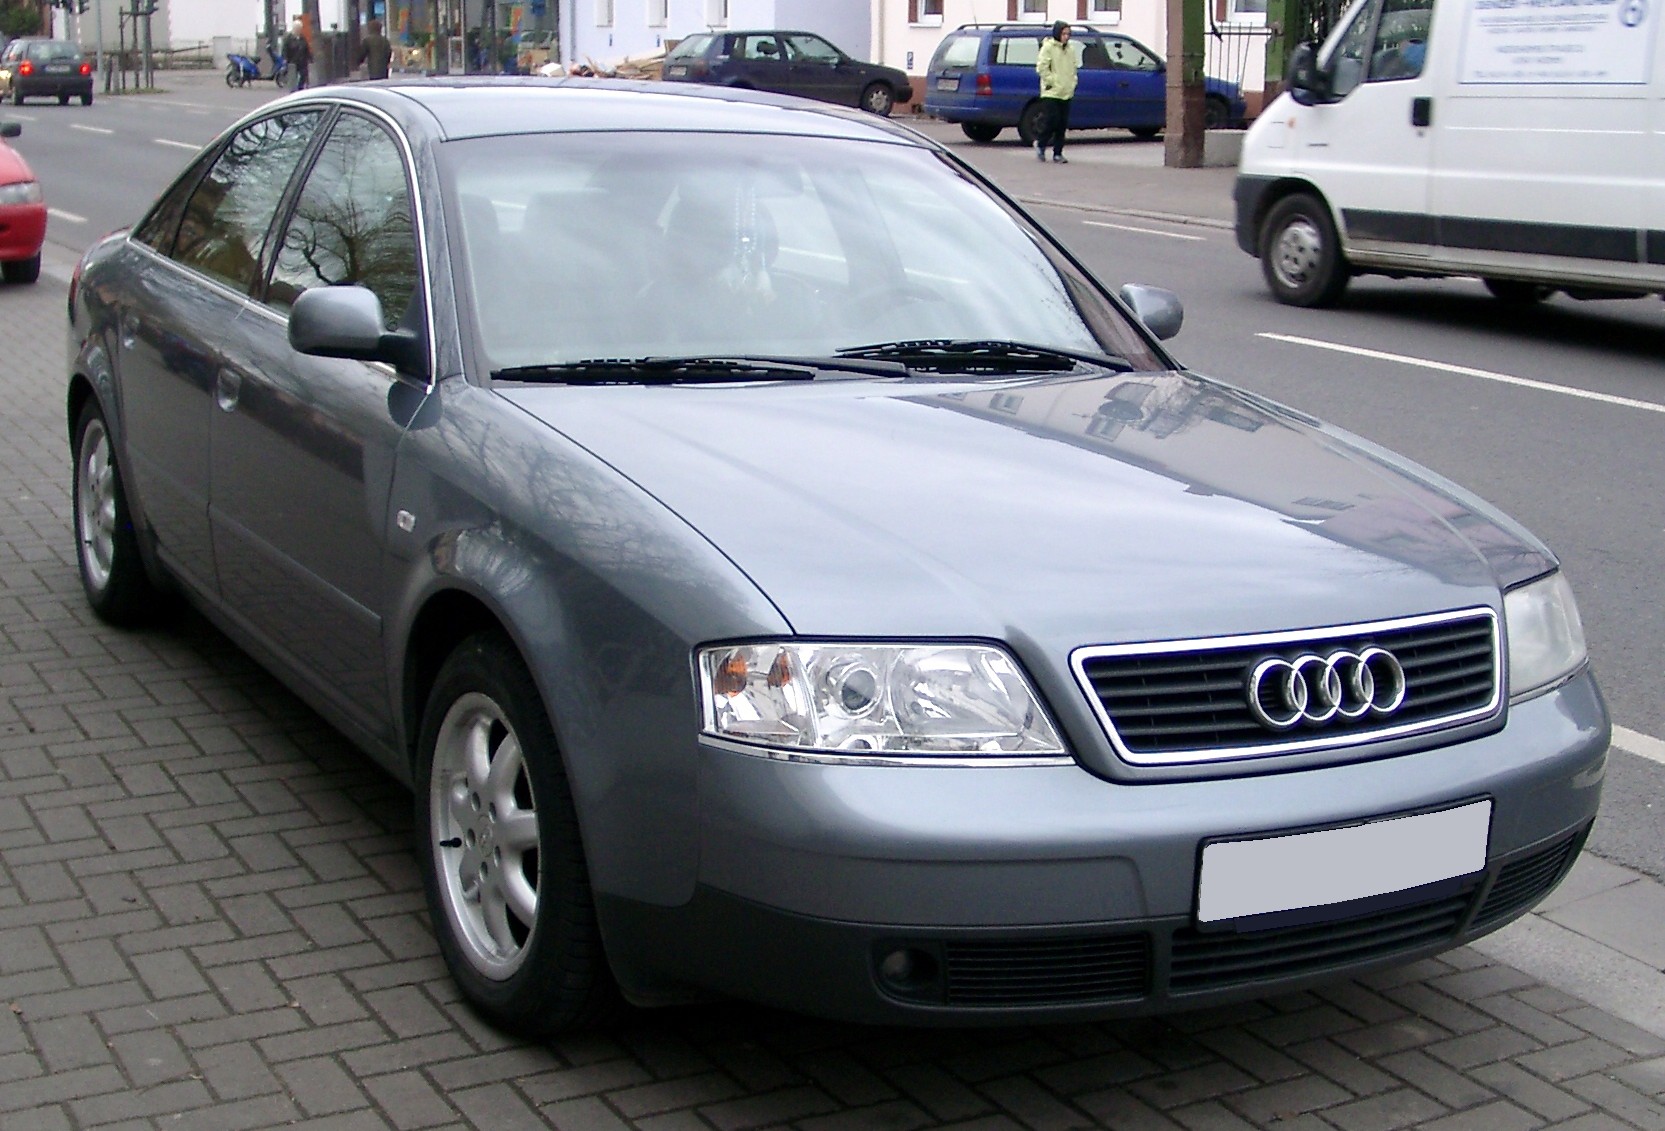 File:Audi A6 C5 rear 20080121.jpg - Wikimedia Commons